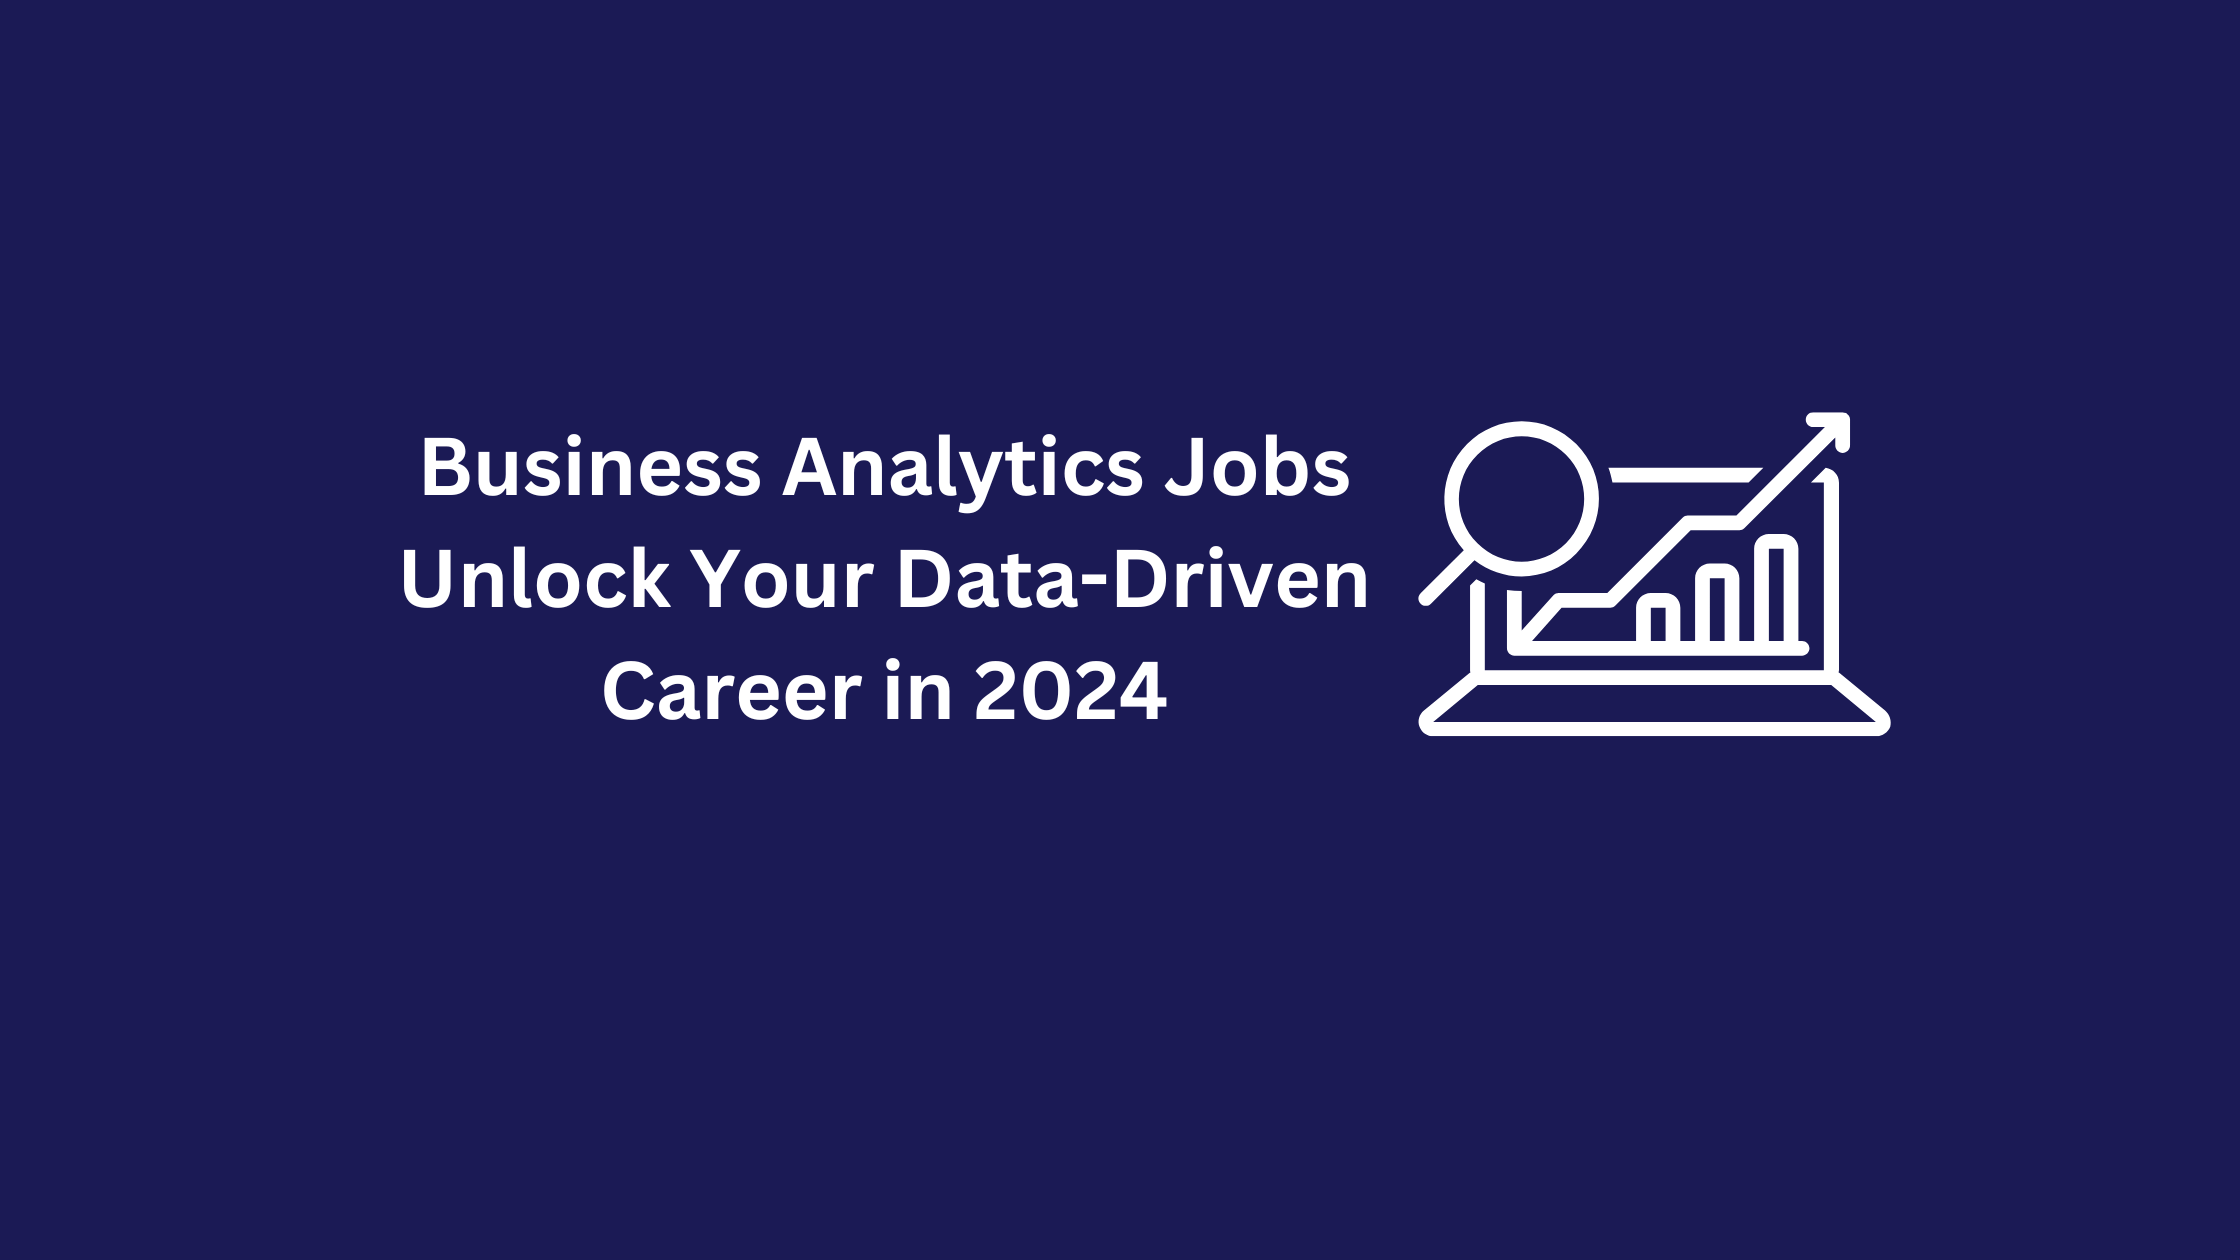 Business analytics jobs